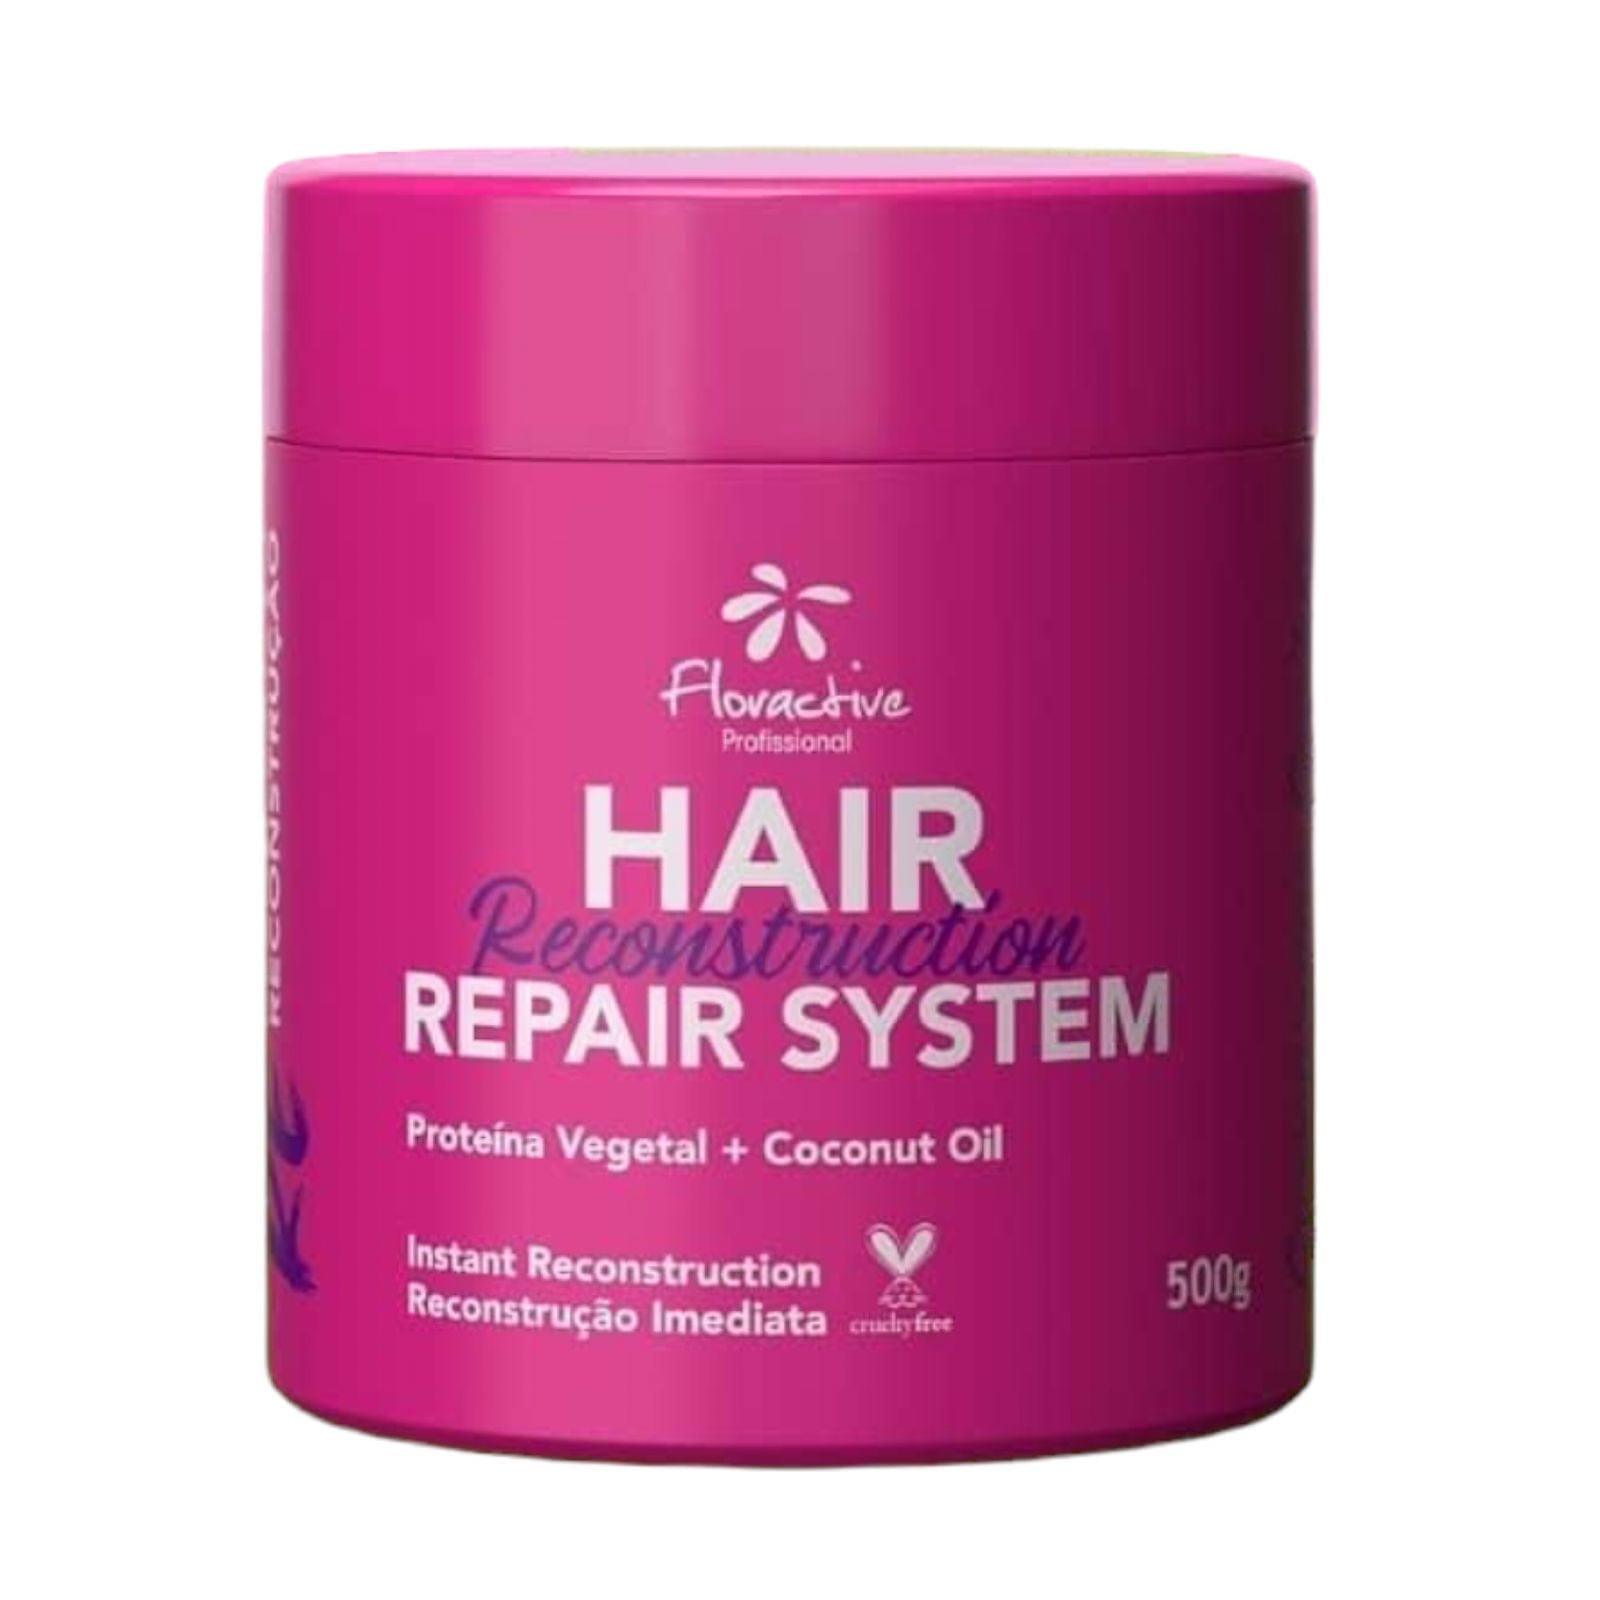 Floractive Hair Reconstruction Repair System Hair Mask 500g